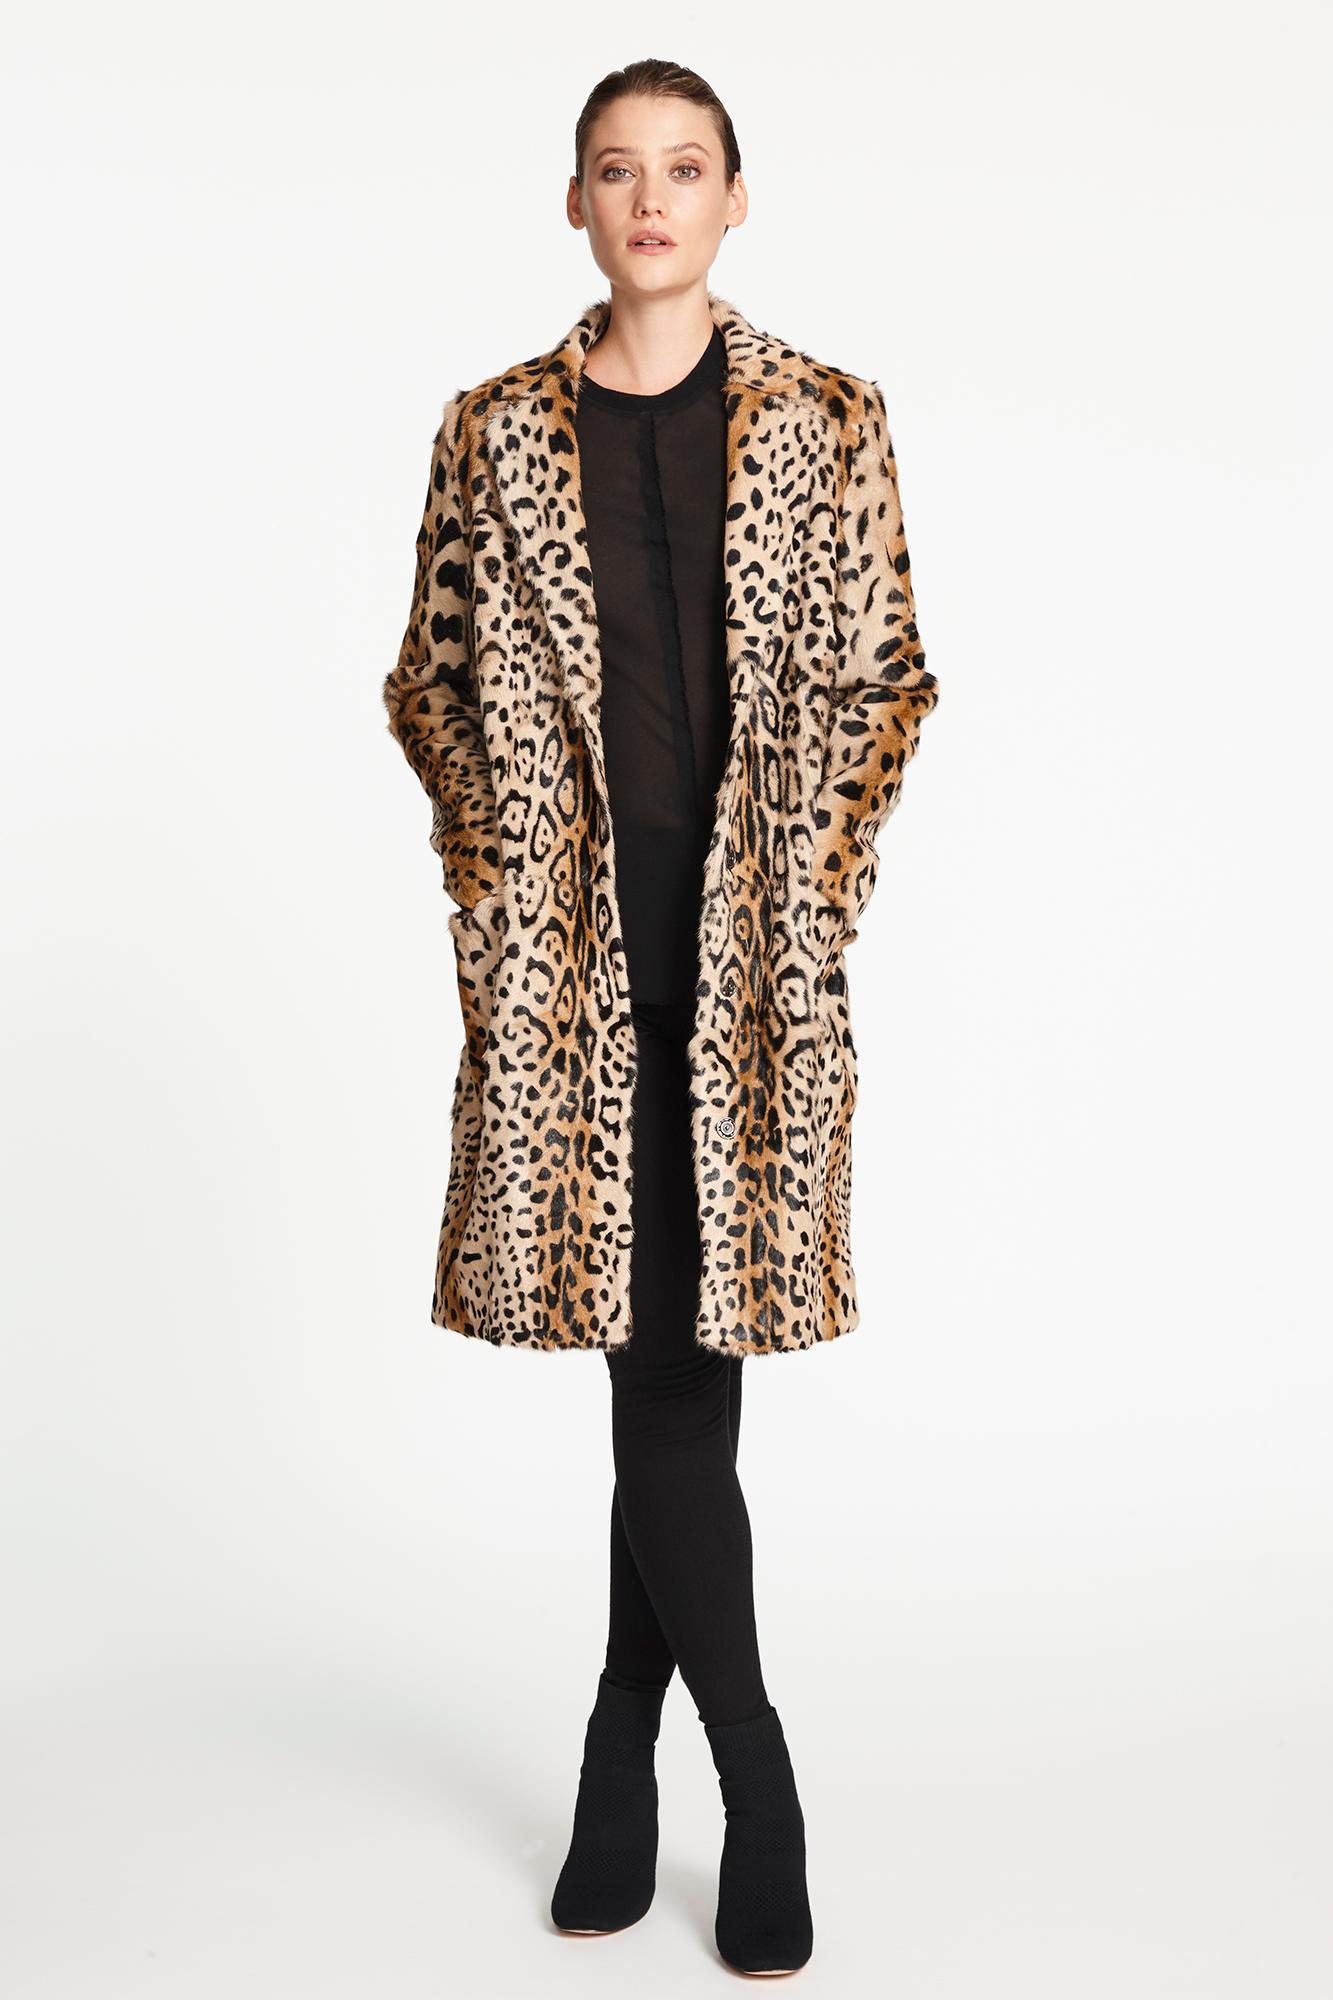 Women's Verheyen London Leopard Print Coat in Natural Goat Hair Fur UK 10 - Brand New 